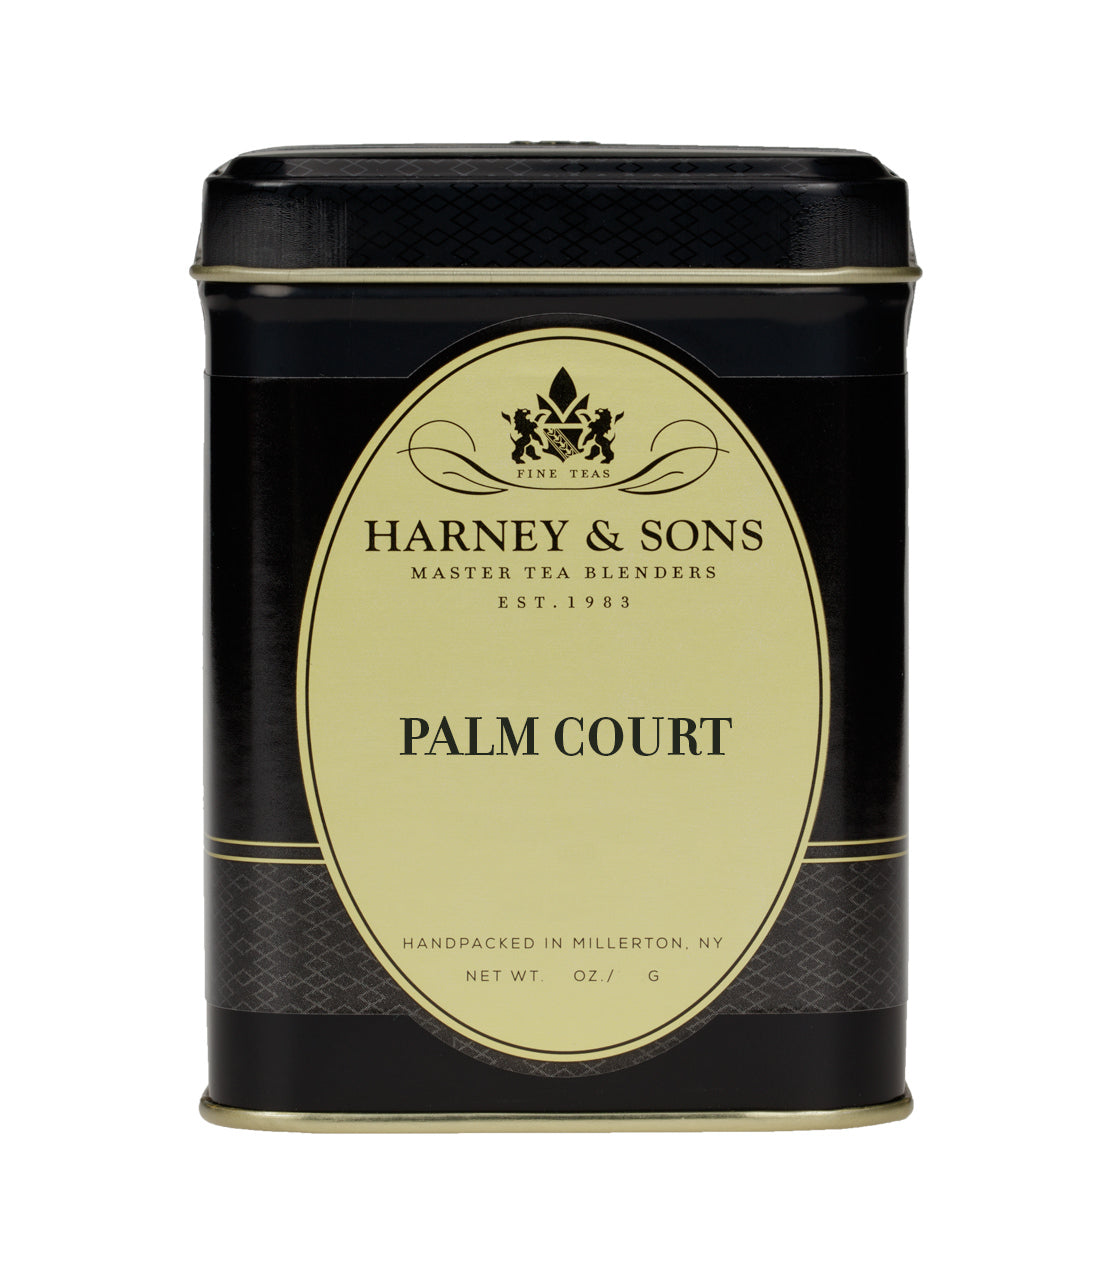 Palm Court - Loose 4 oz. Tin - Harney & Sons Fine Teas